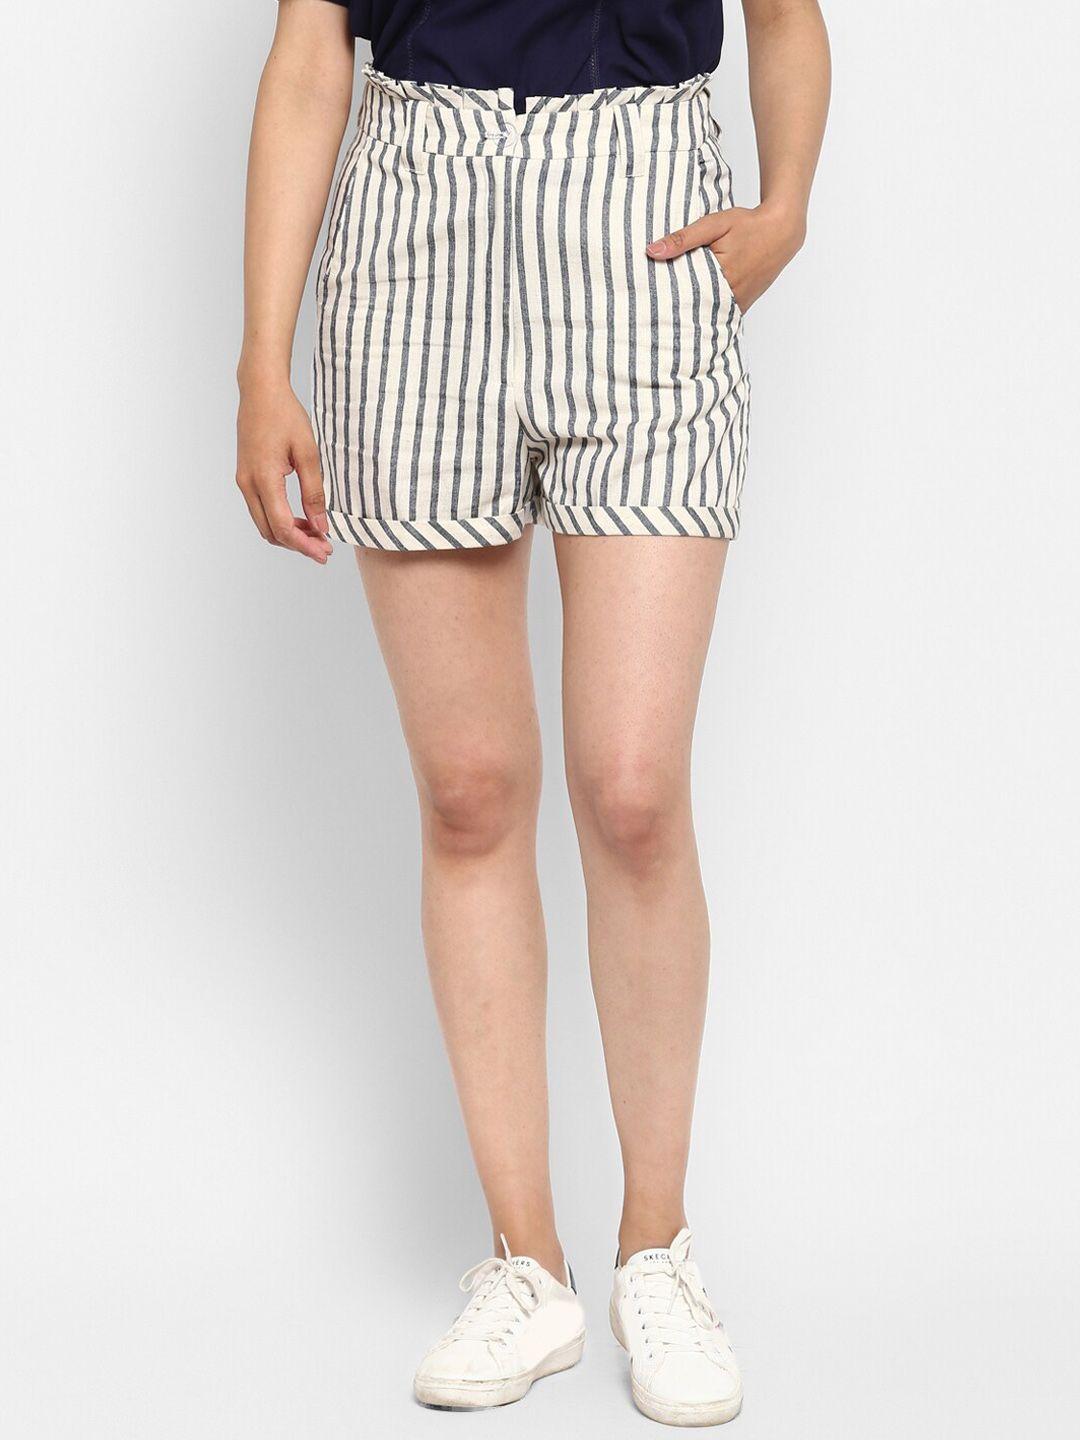 deebaco women off white striped mid-rise hot pants